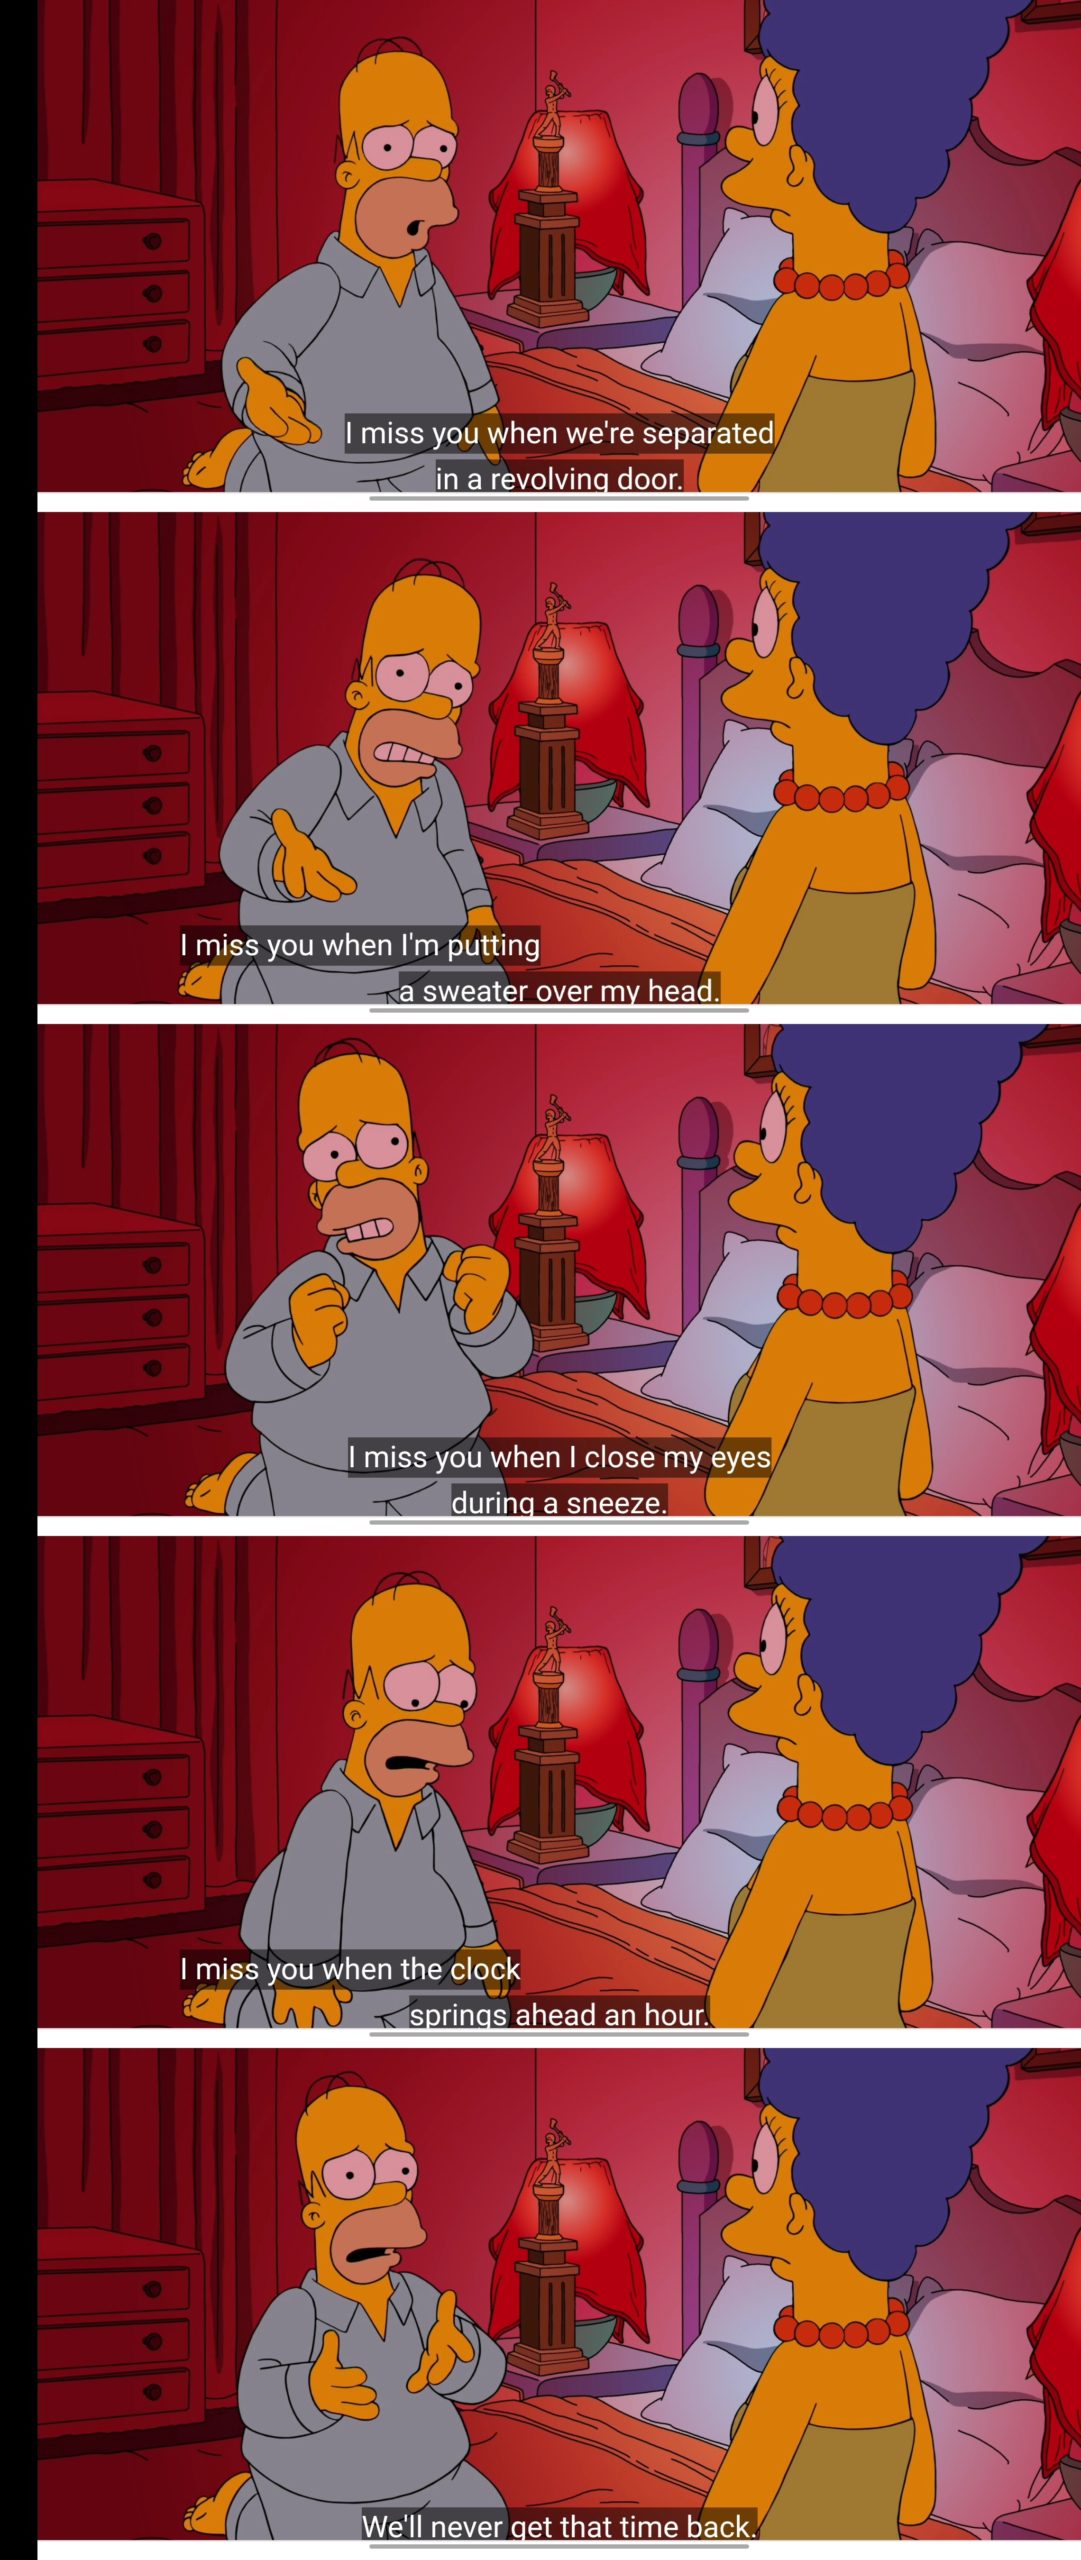 Homer+seems+a+little+needy%2C+honestly.